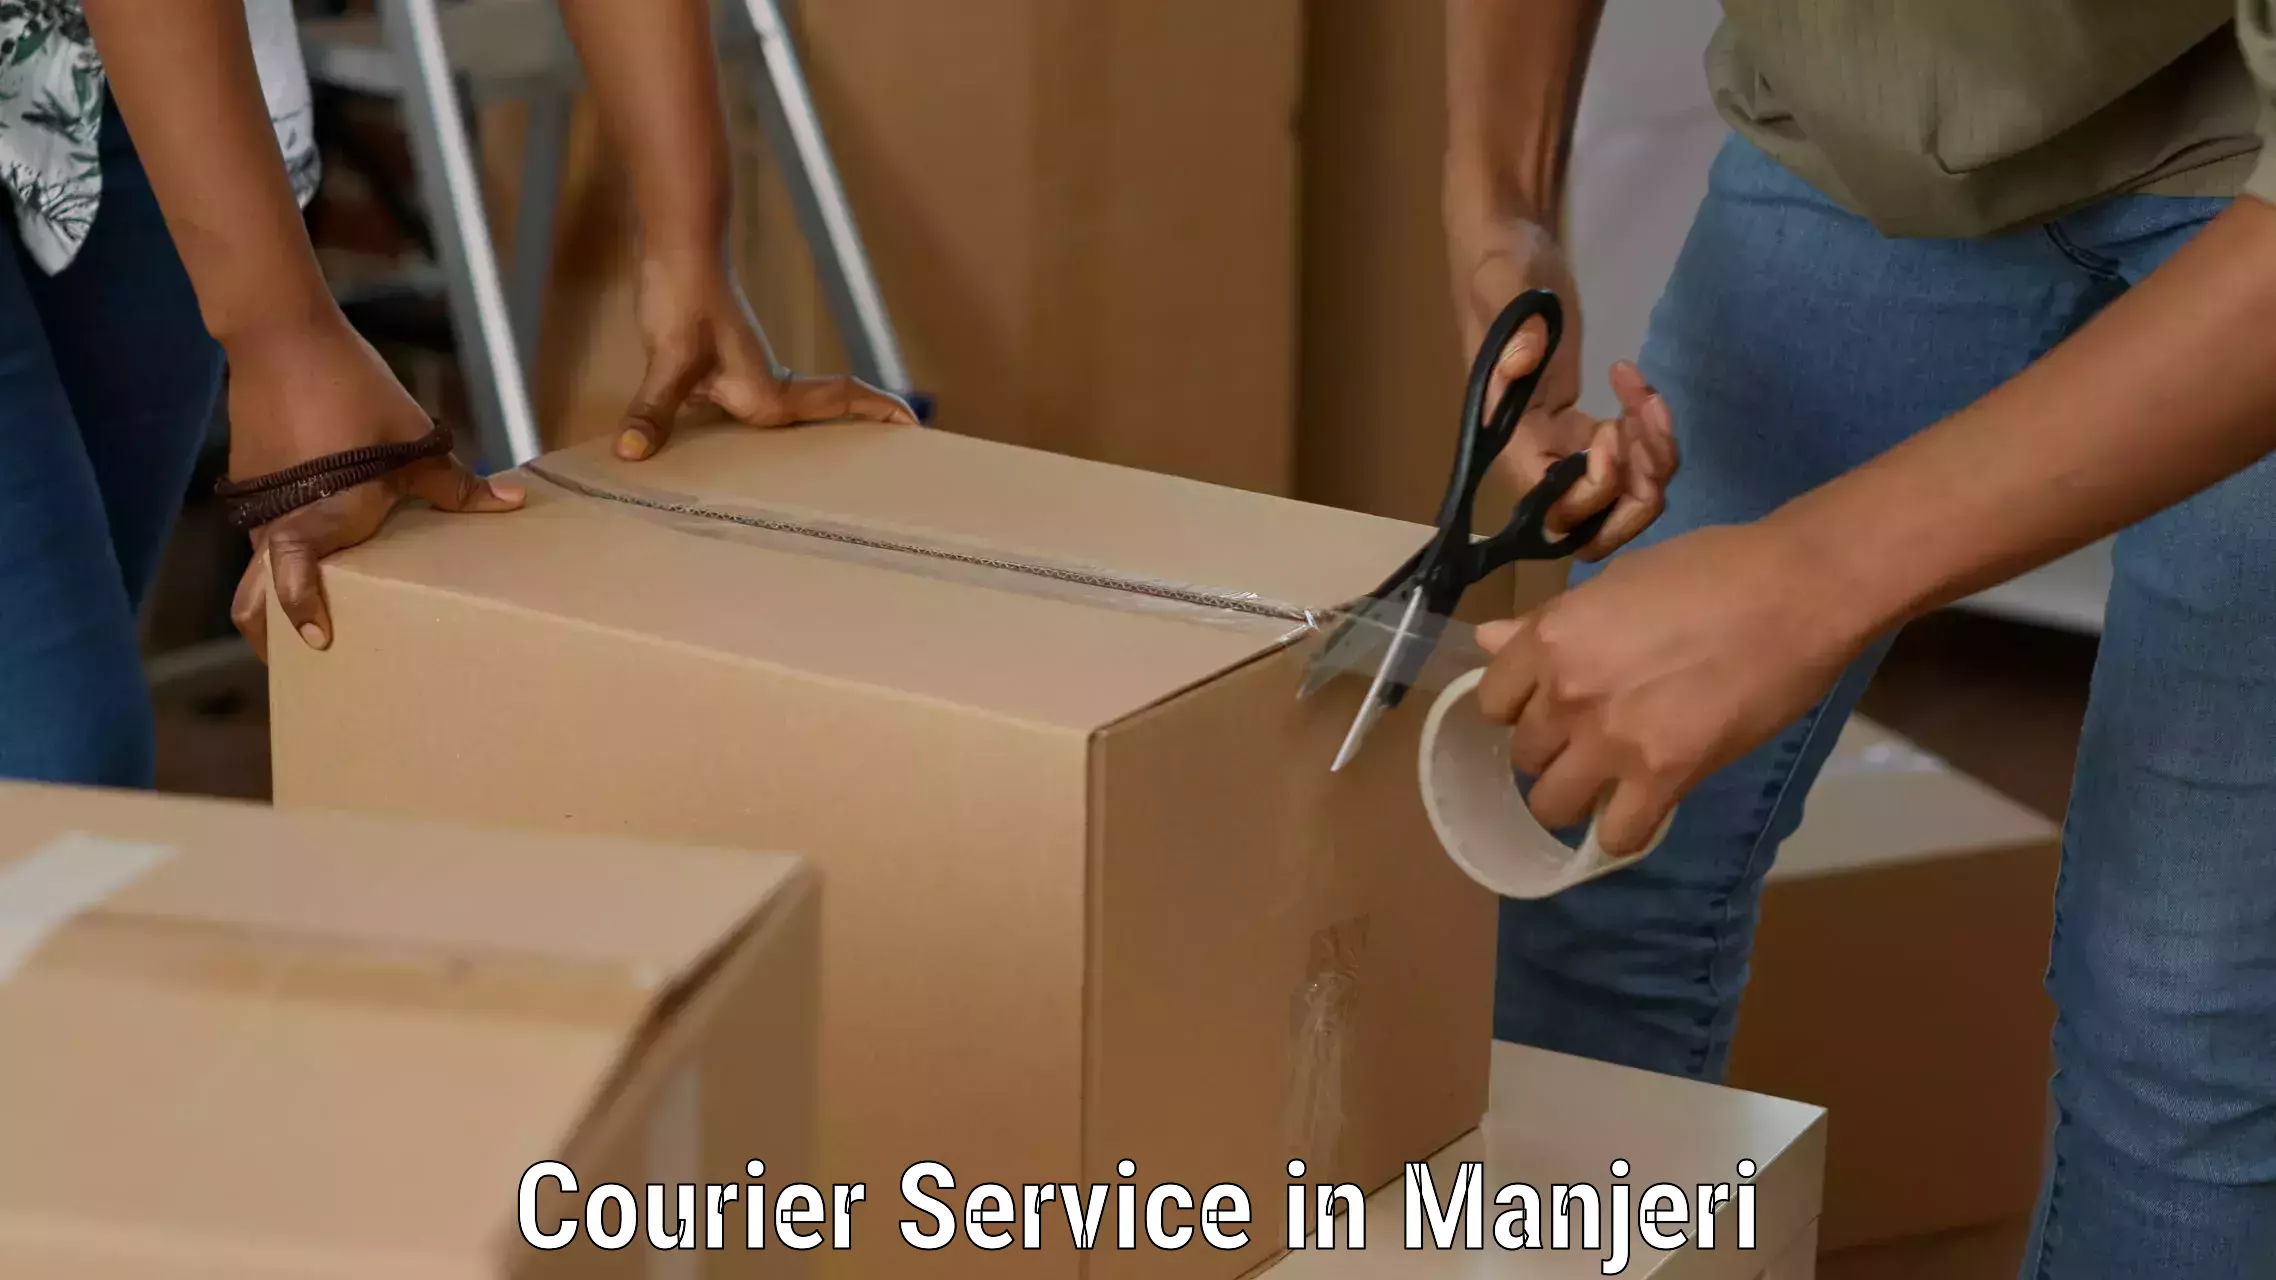 Professional parcel services in Manjeri